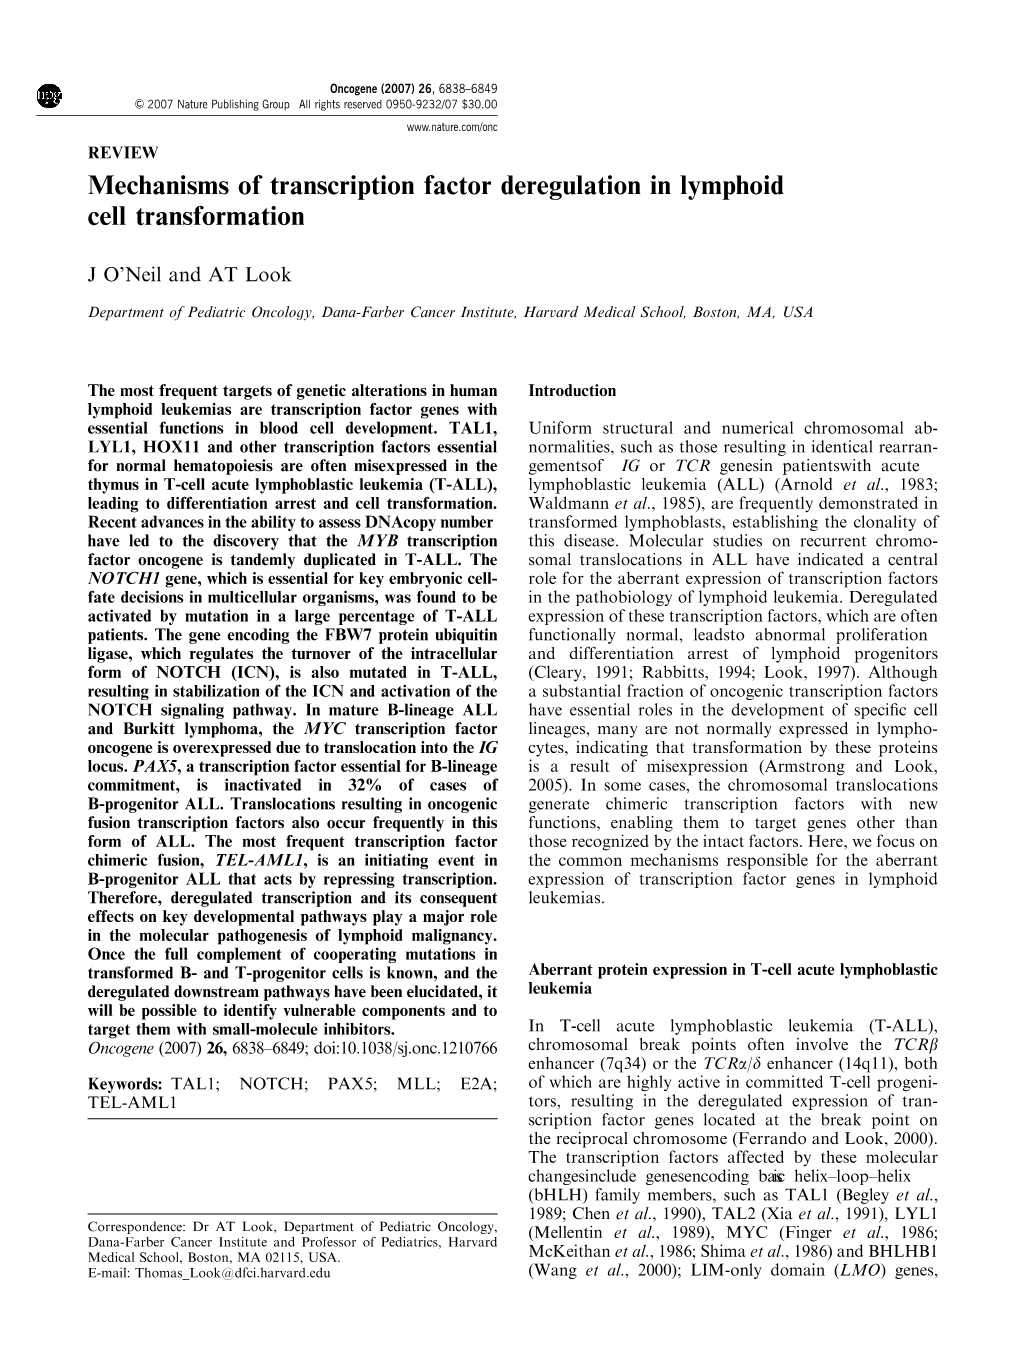 Mechanisms of Transcription Factor Deregulation in Lymphoid Cell Transformation